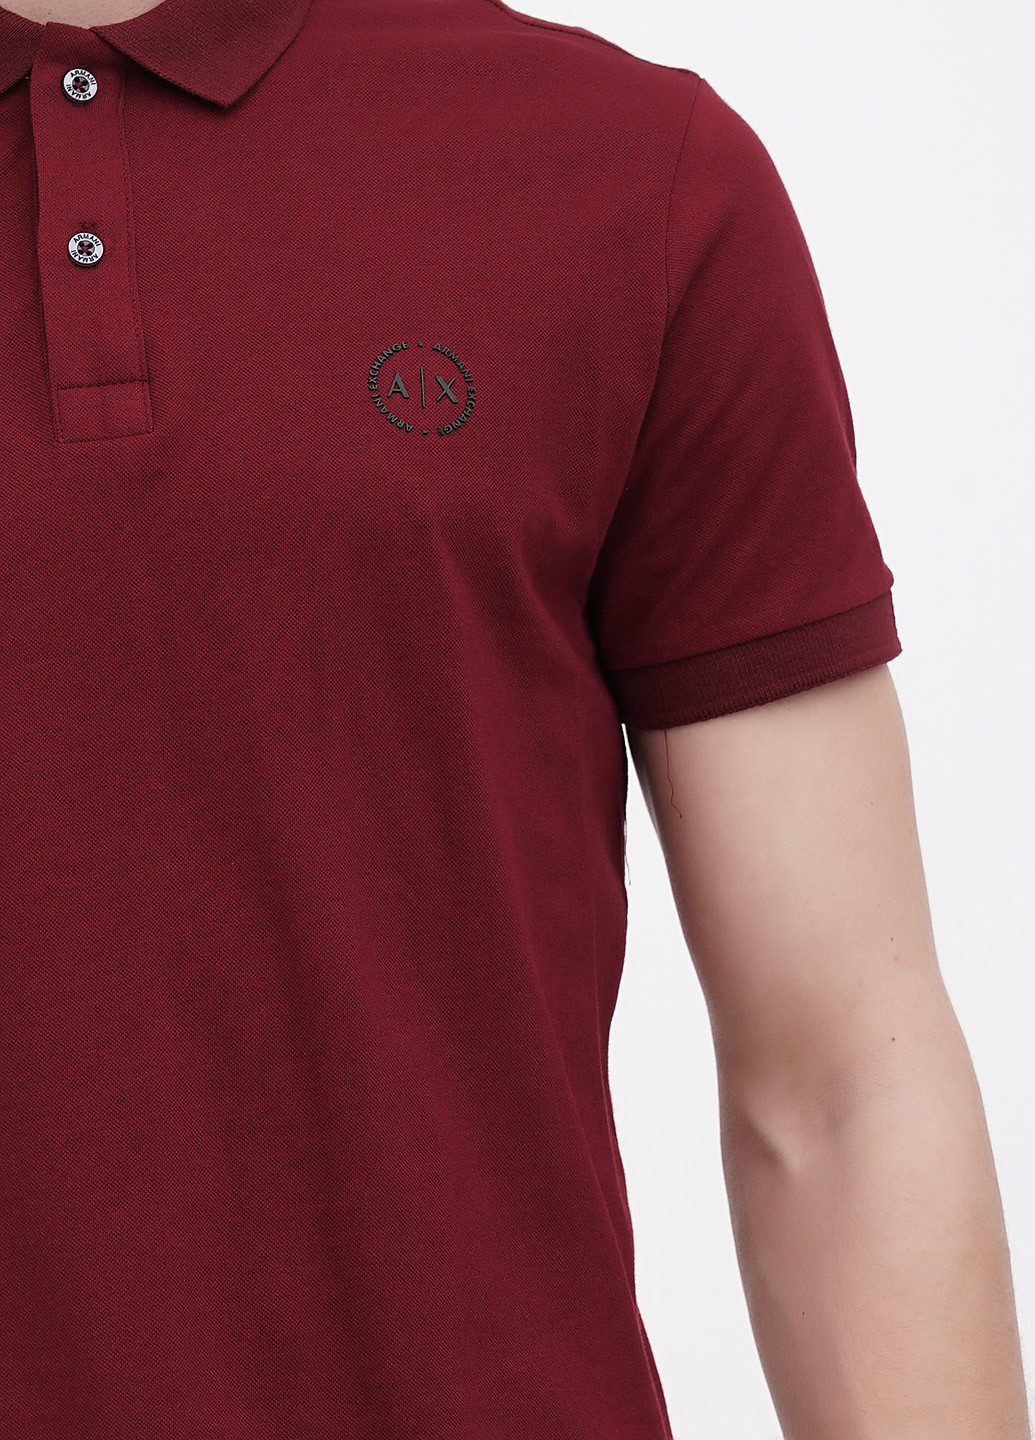 Бордовая футболка-поло для мужчин Armani Exchange с логотипом